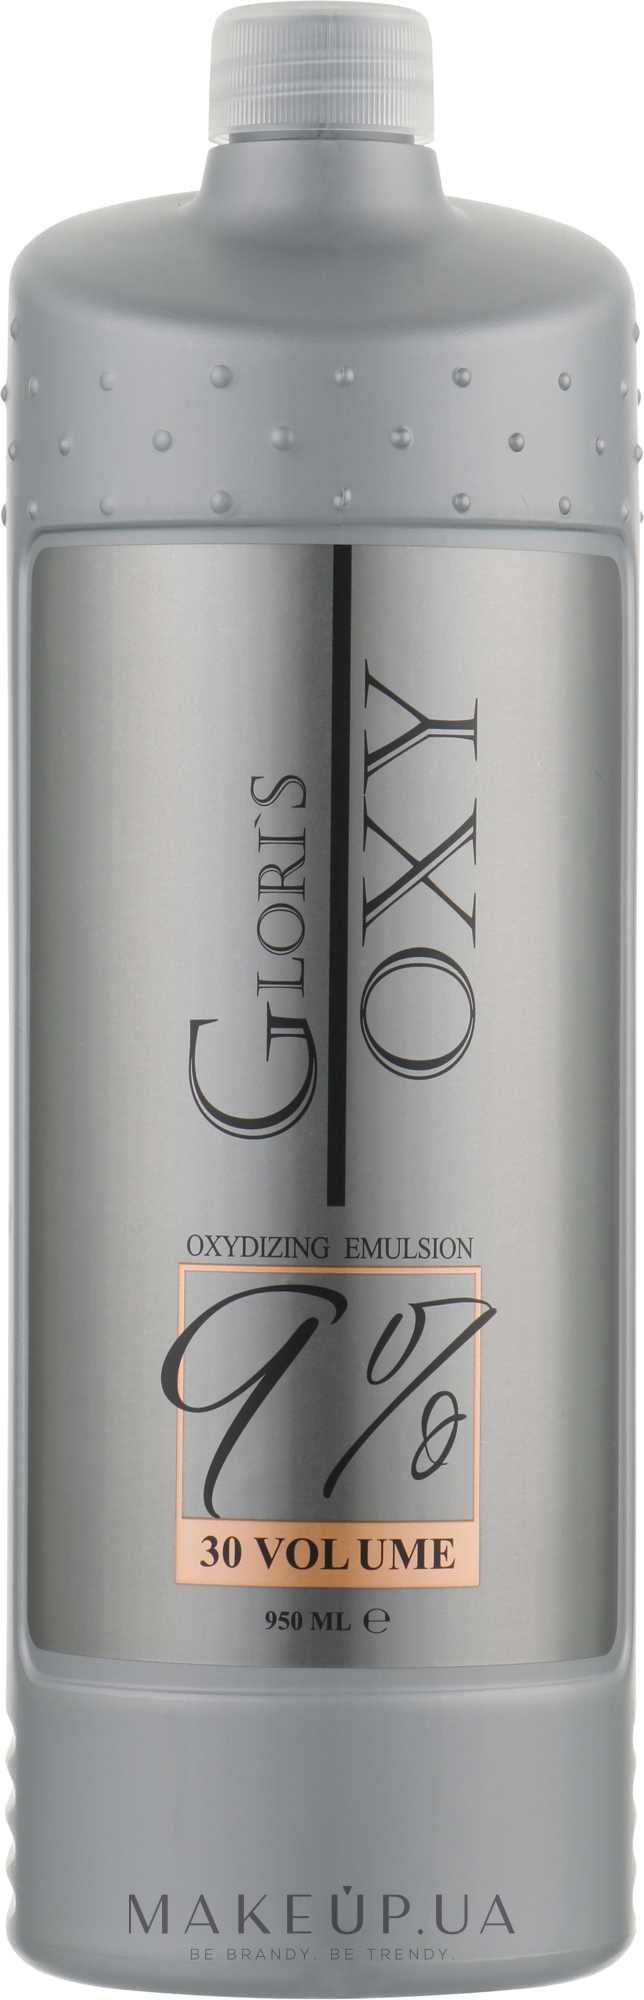 Окислительная эмульсия 9 % - Glori's Oxy Oxidizing Emulsion 30 Volume 9 % — фото 950ml